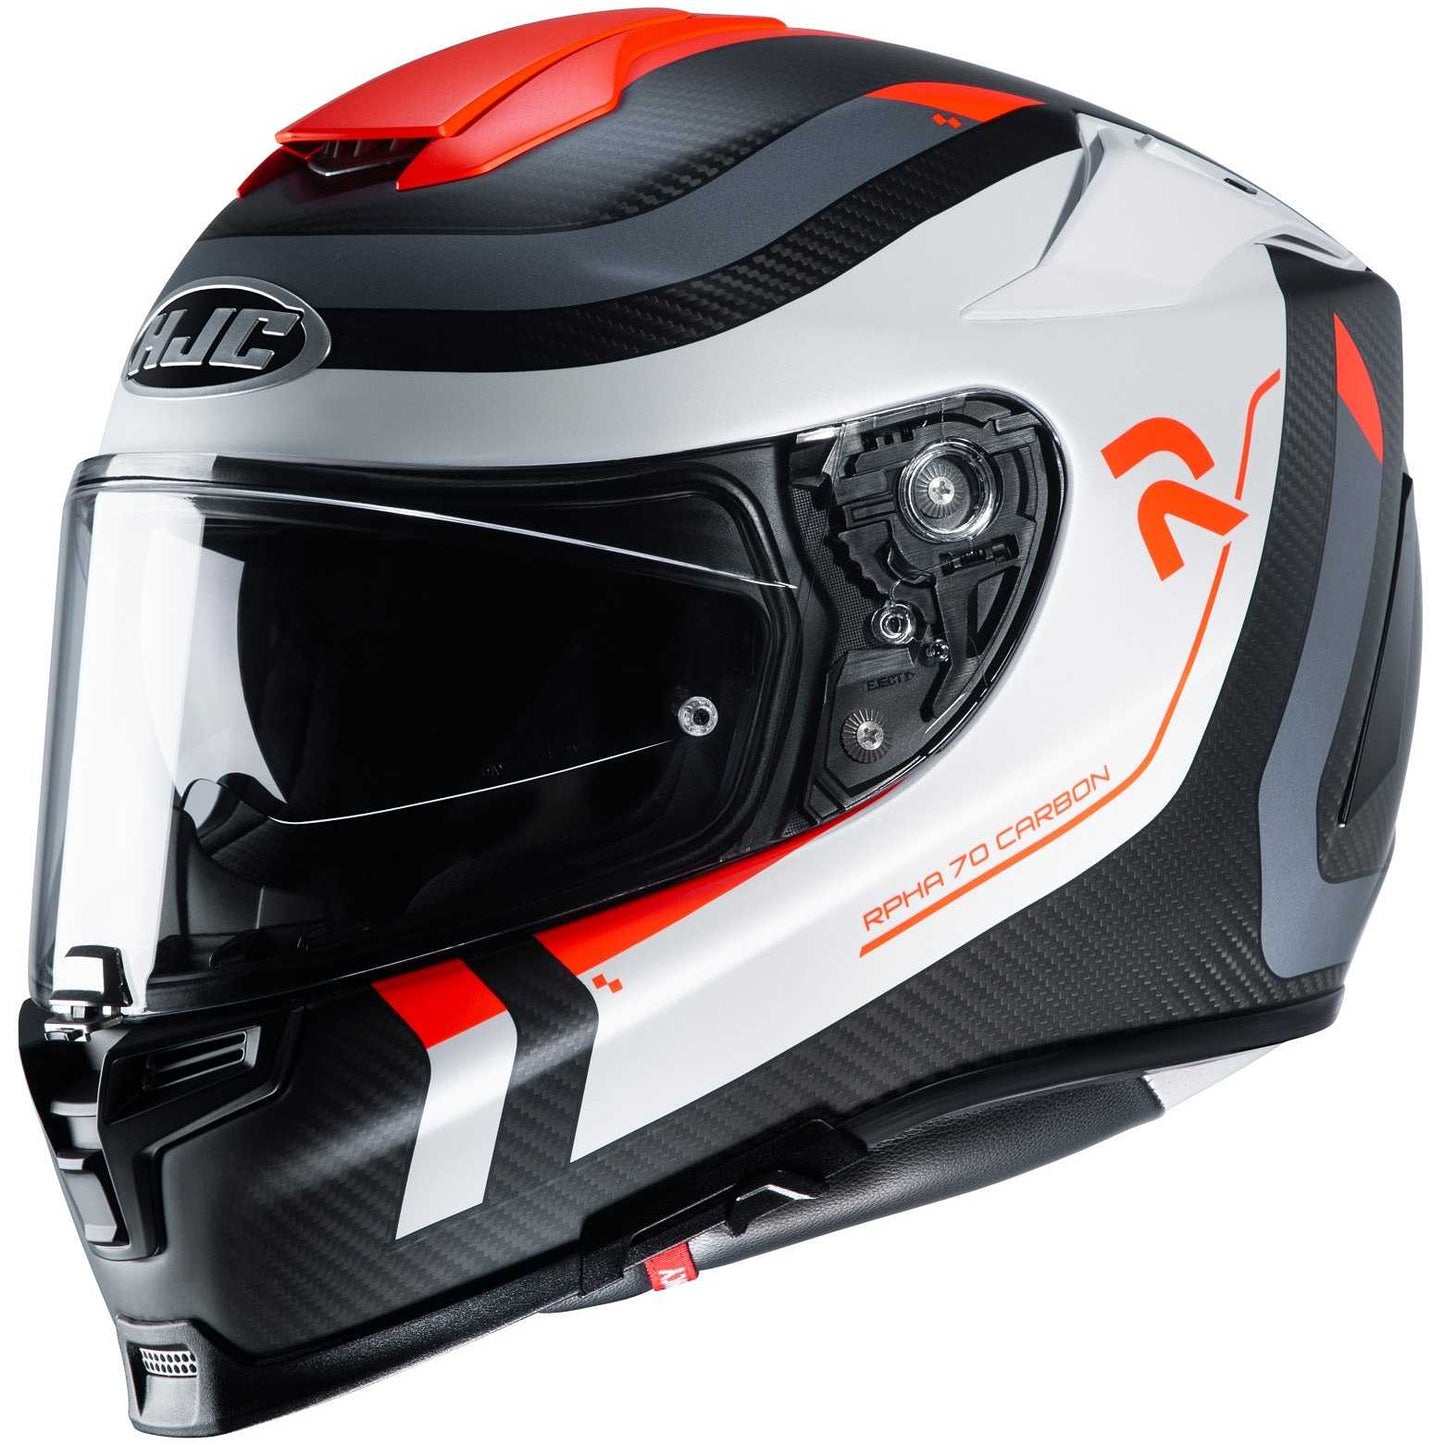 Hjc Rpha 70 Carbon Reple helmet